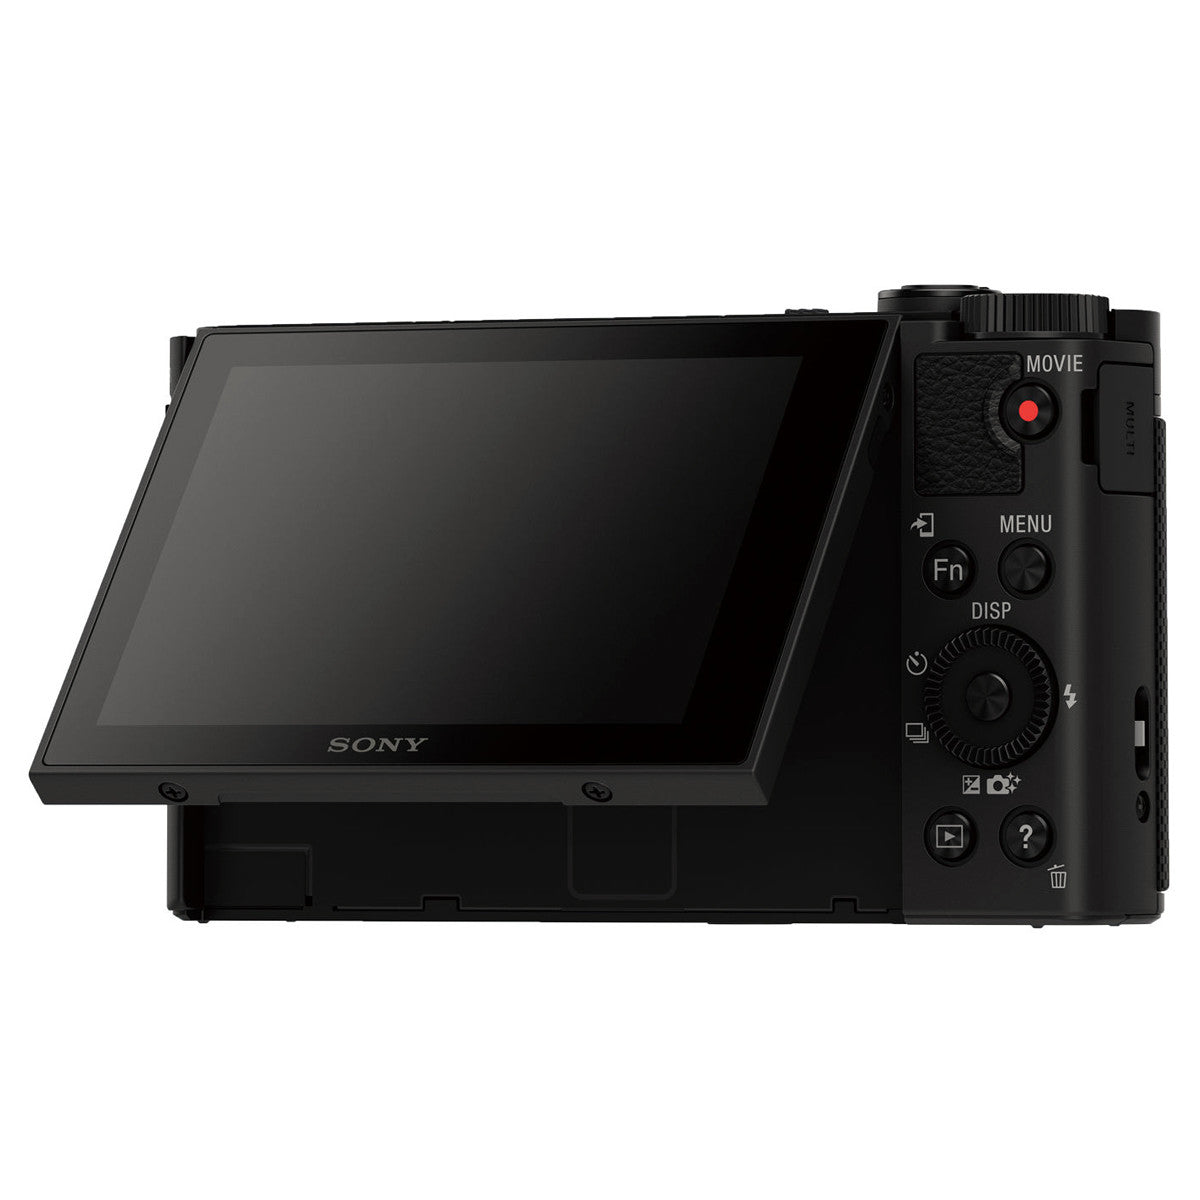 Sony Cyber-Shot DSC-HX80 Digital Camera